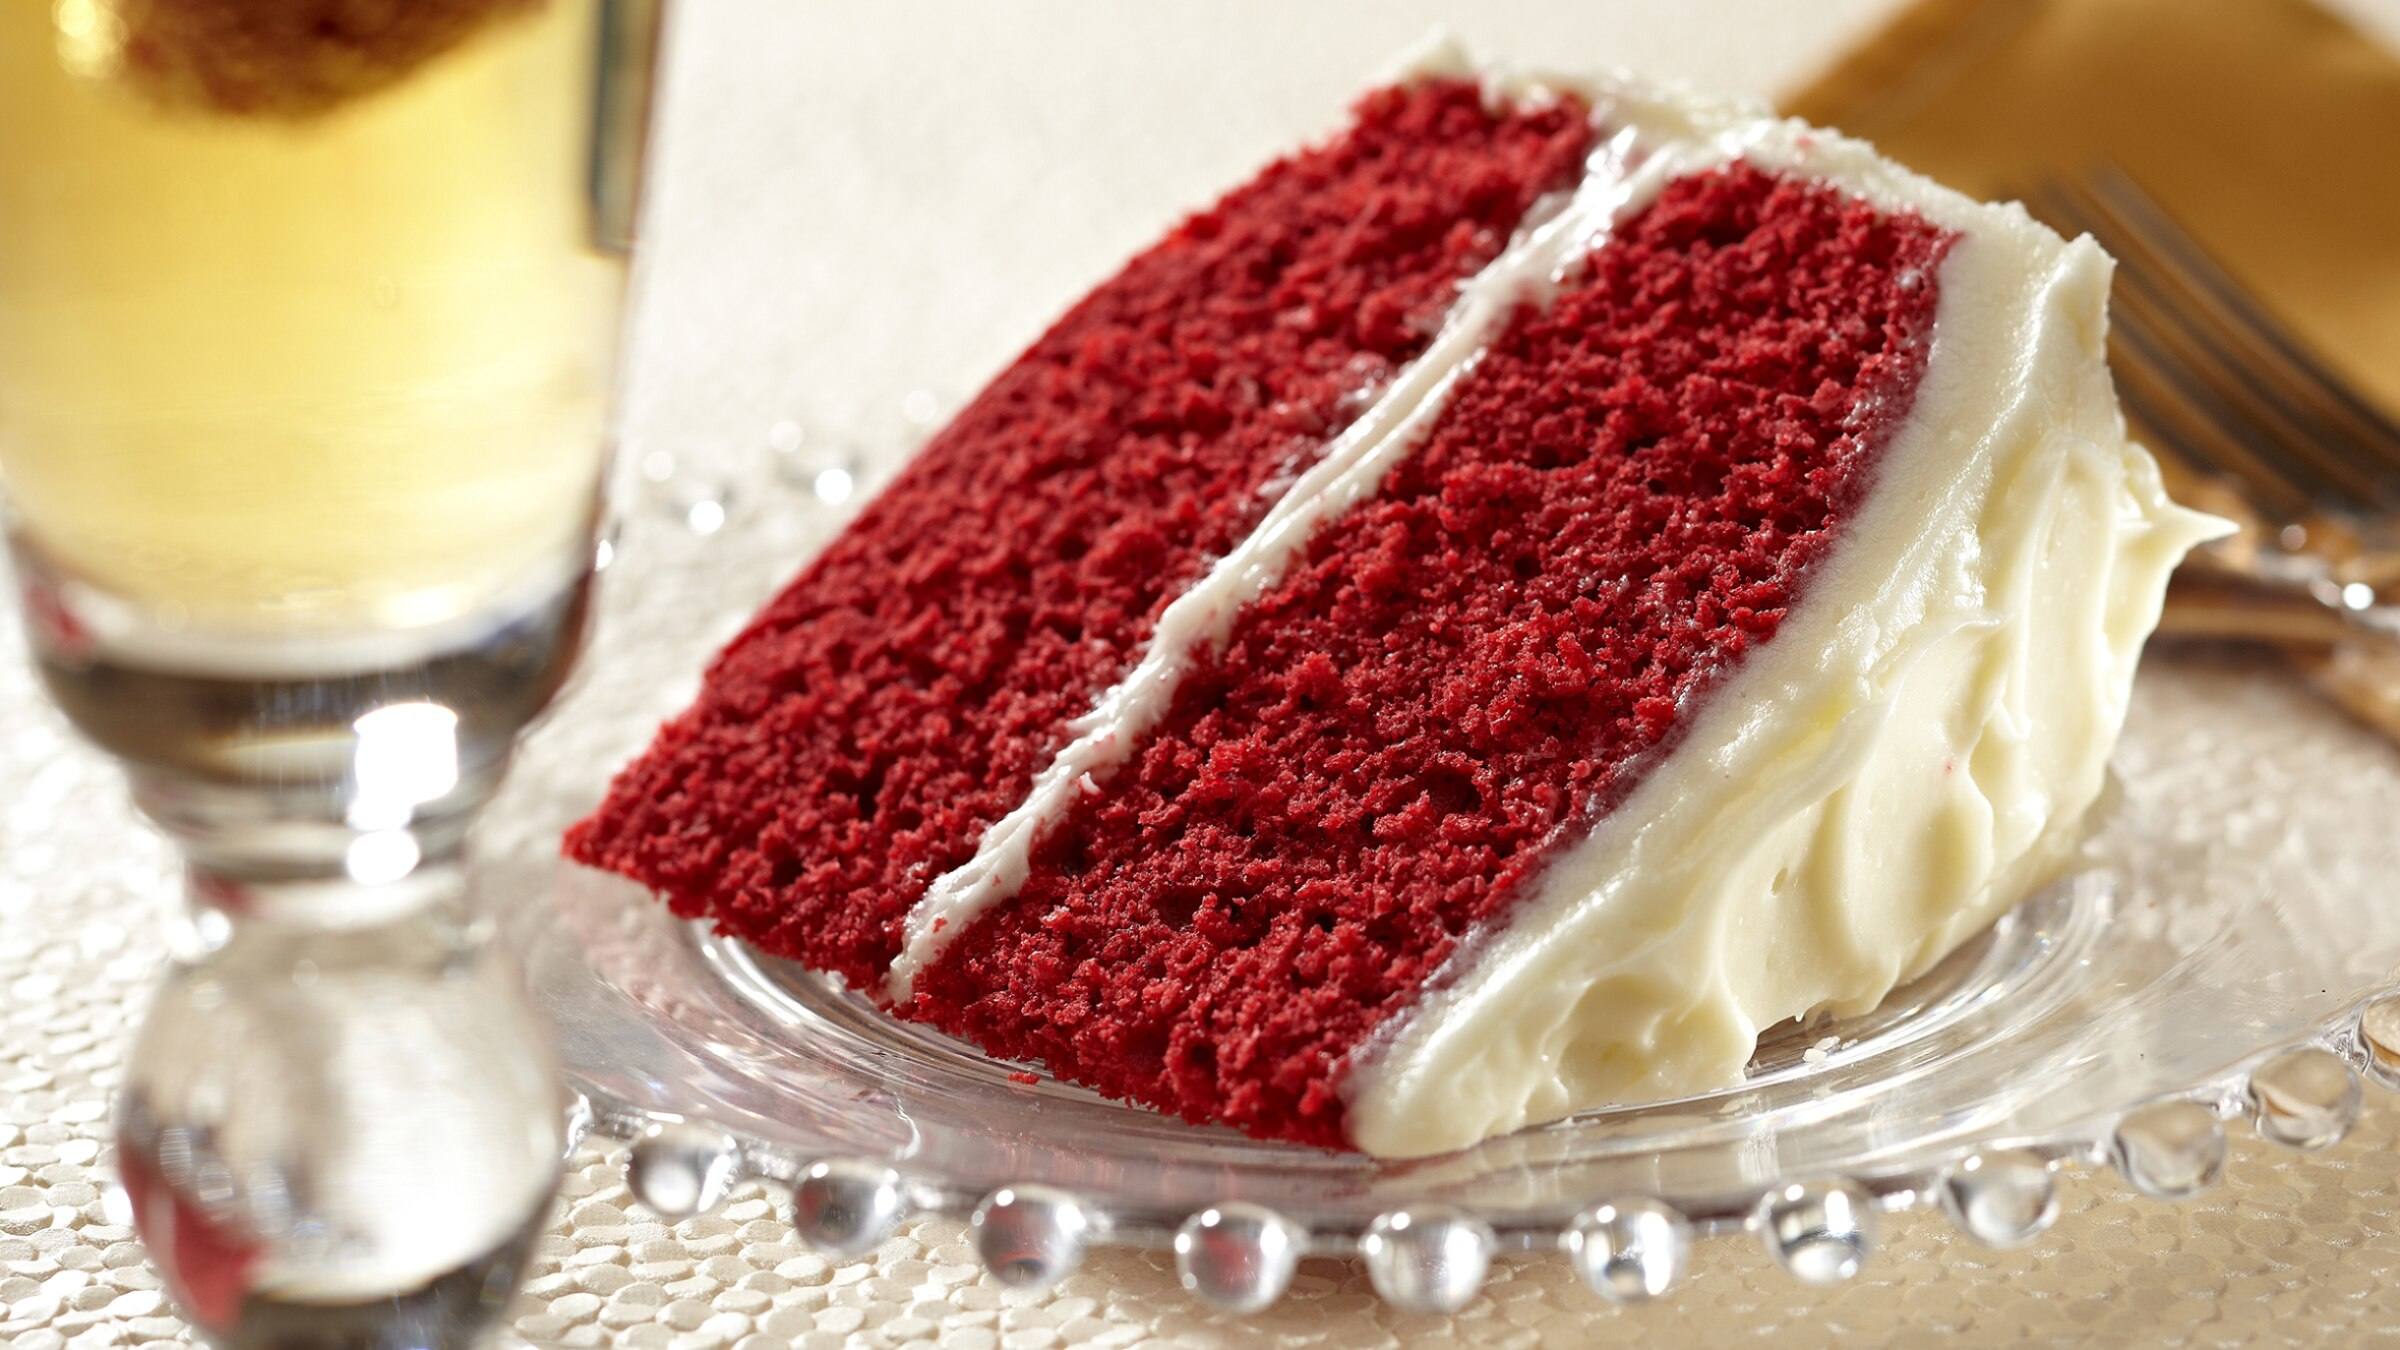 Super Moist Red Velvet Cake with Cream Cheese Frosting